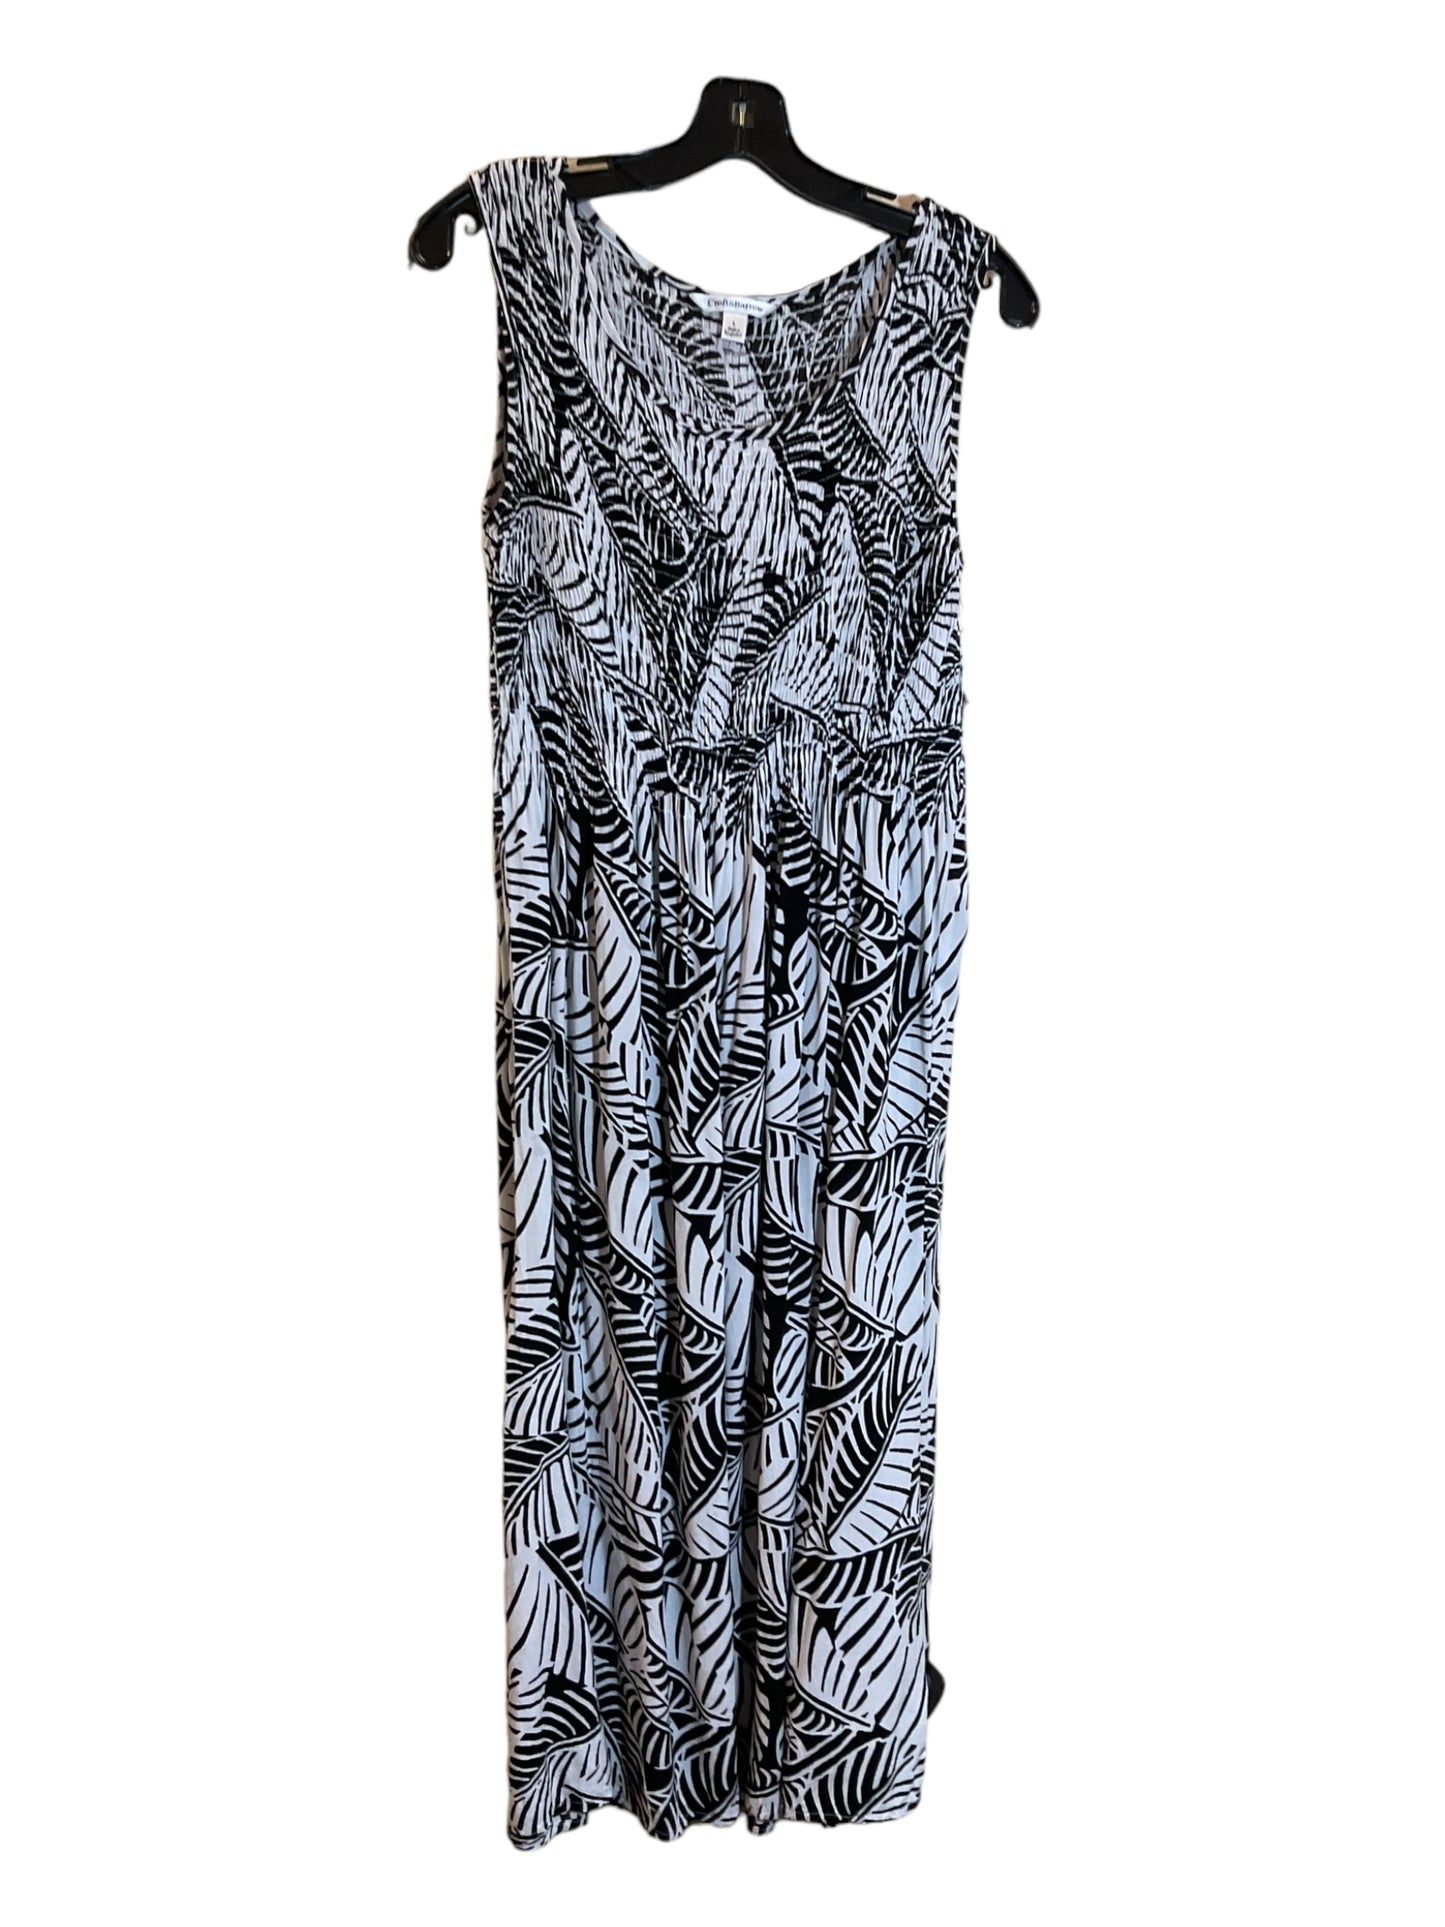 Dress Casual Midi By Croft And Barrow  Size: L